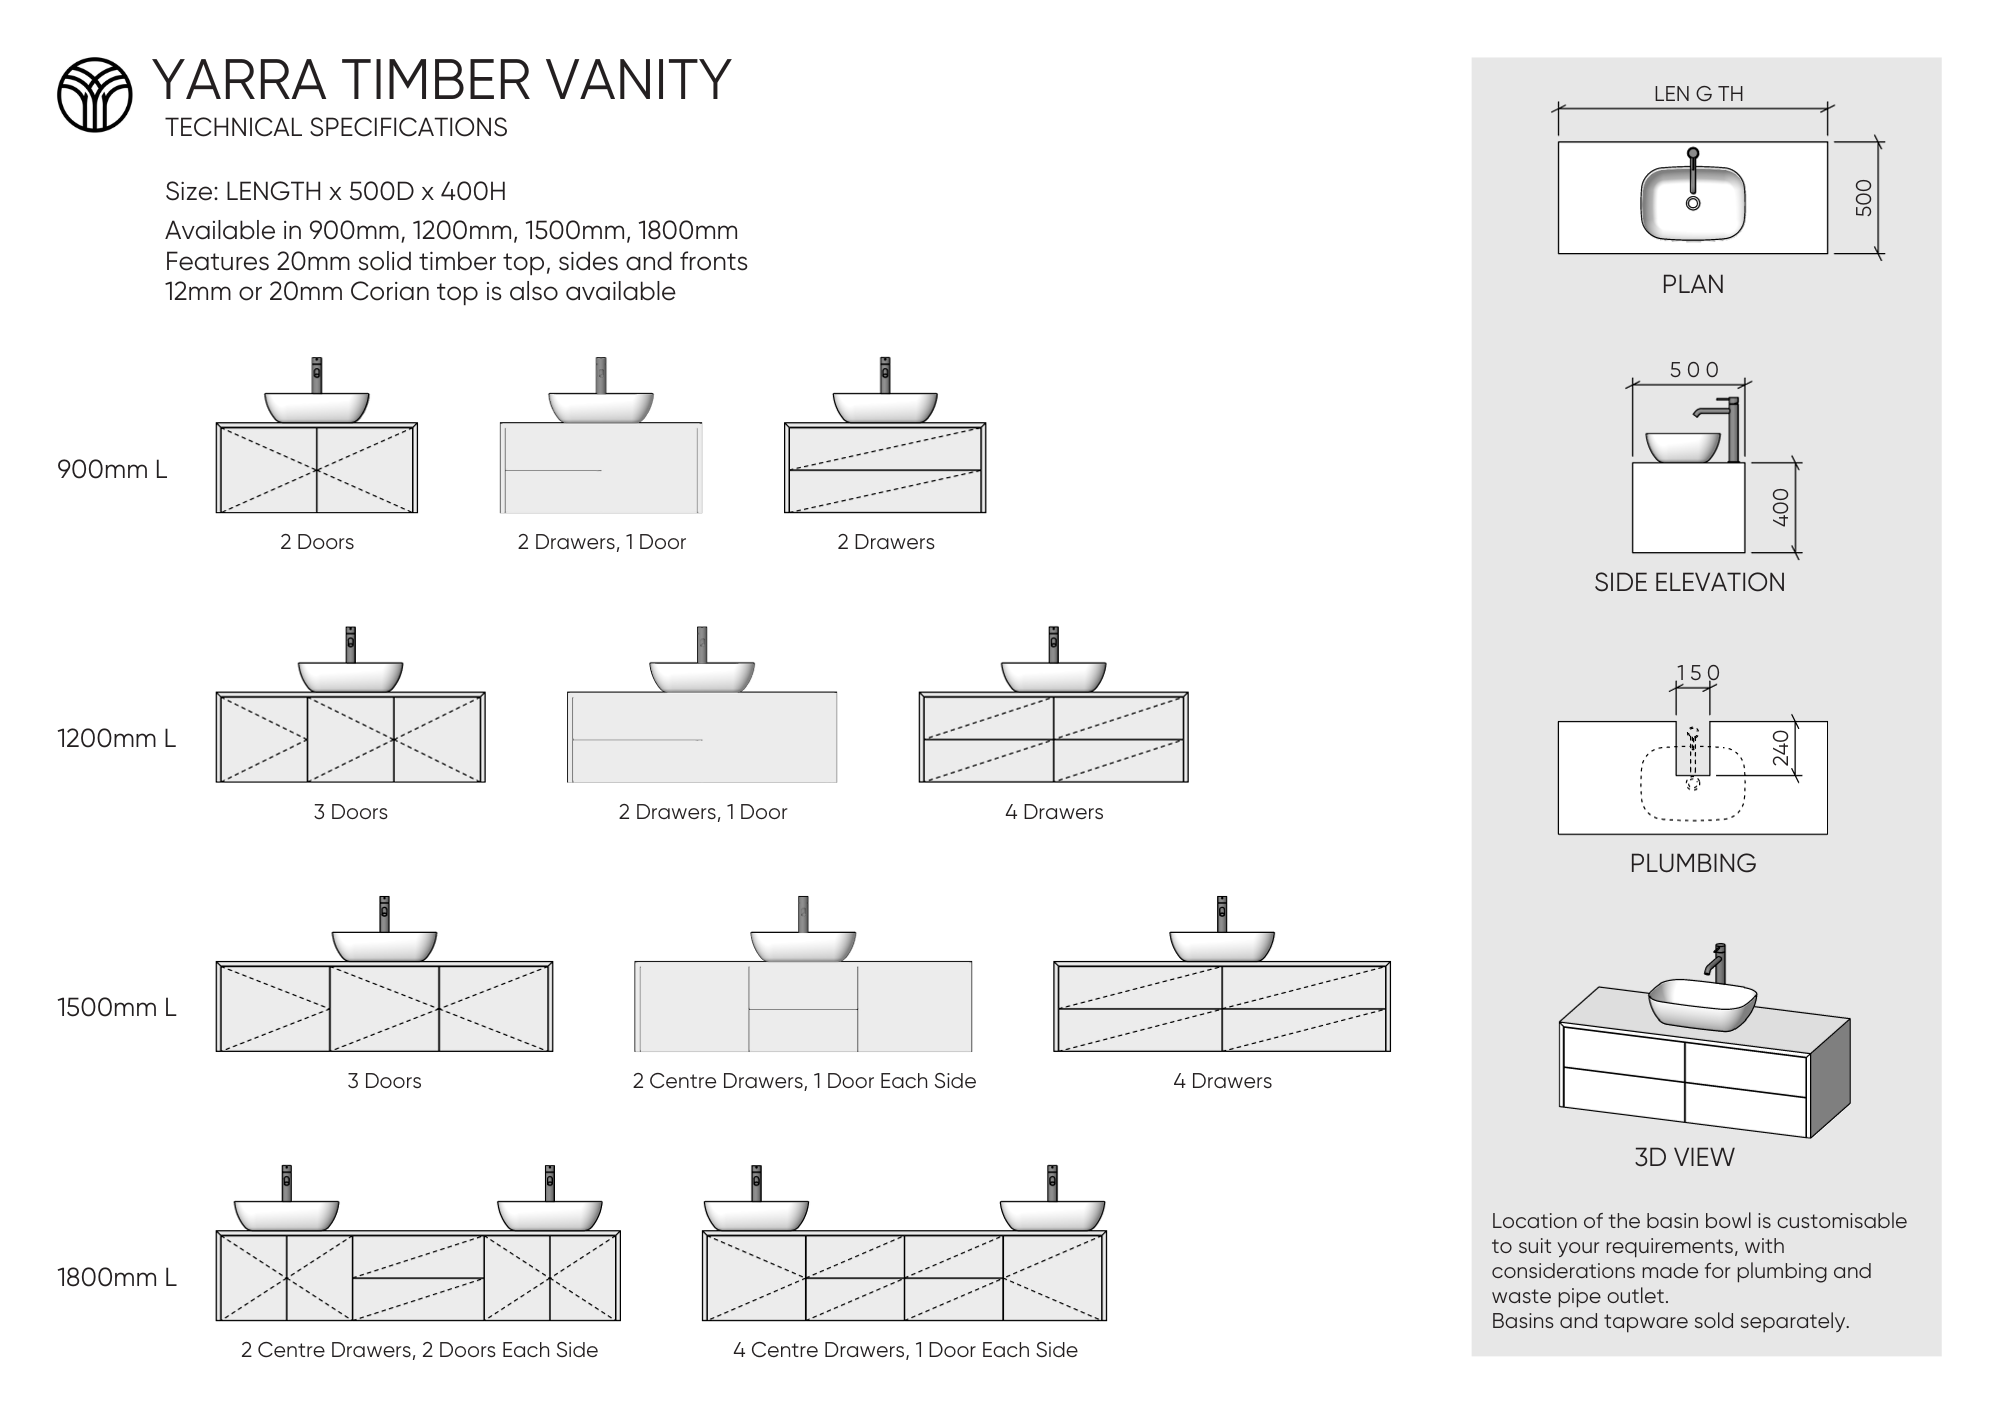 Yarra Timber Vanity